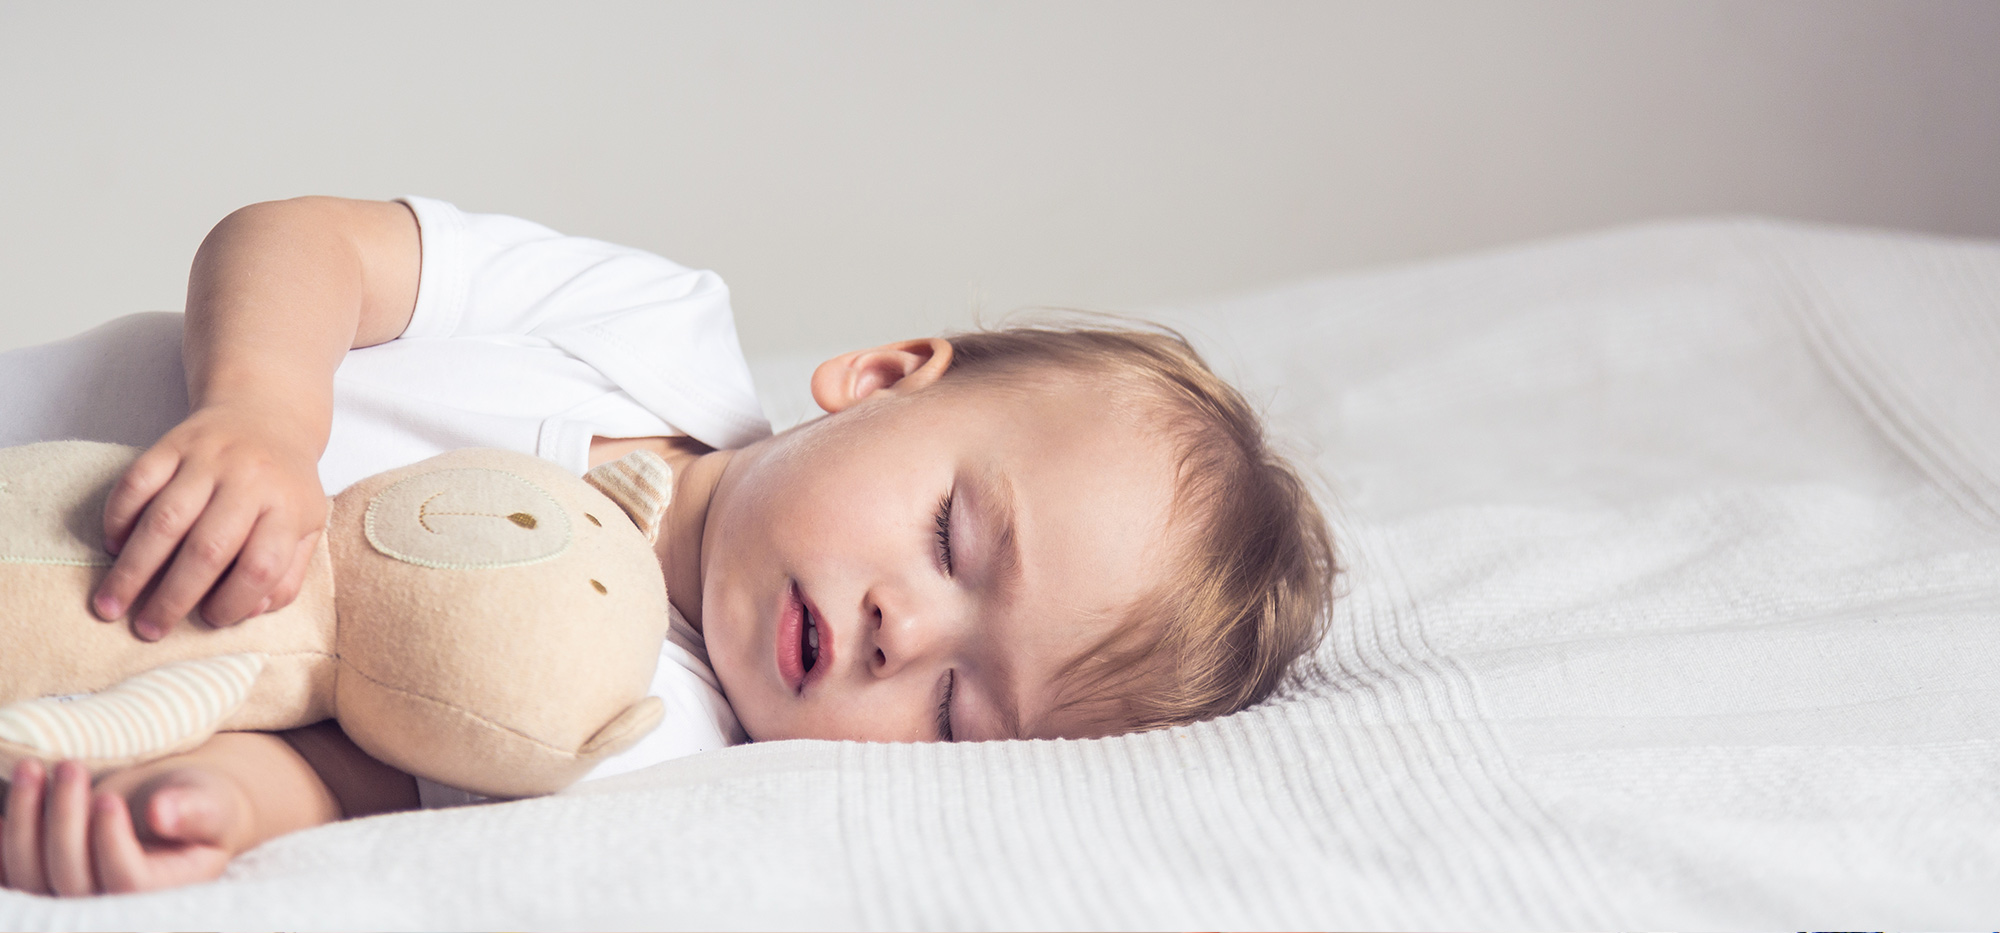 How and where should an infant sleep?